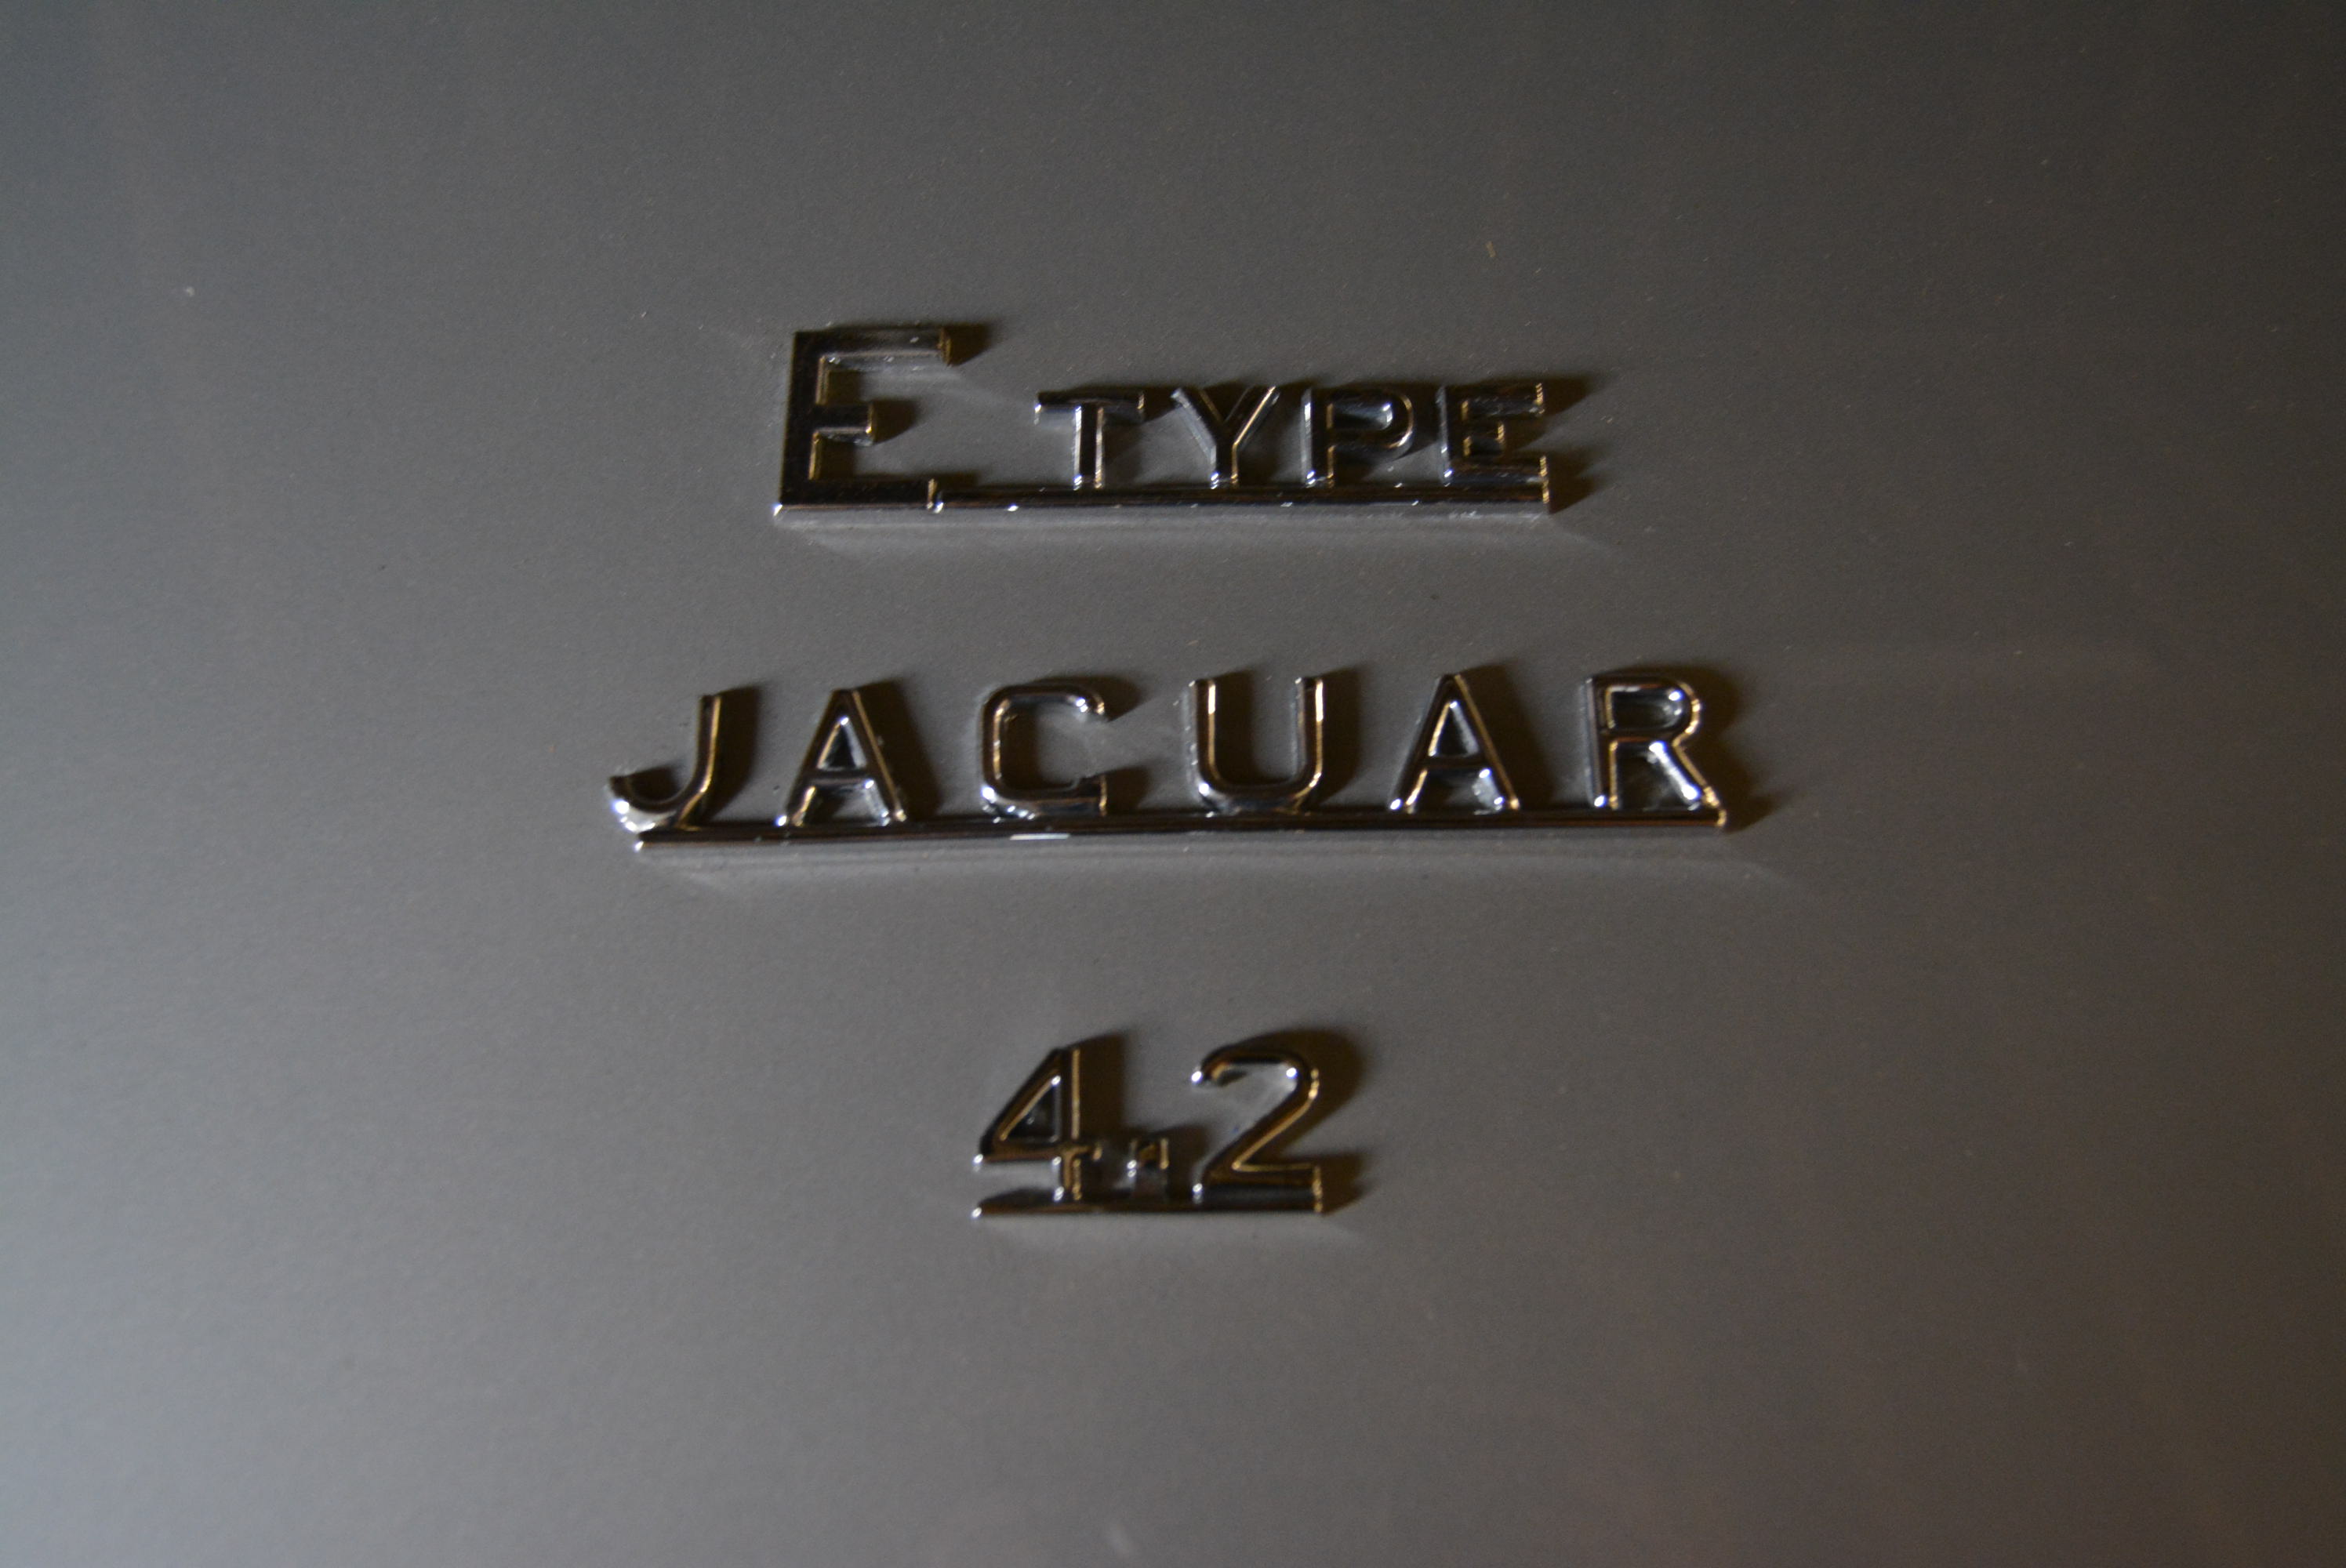 Jaguar E-Type S2 4.2 Roadster